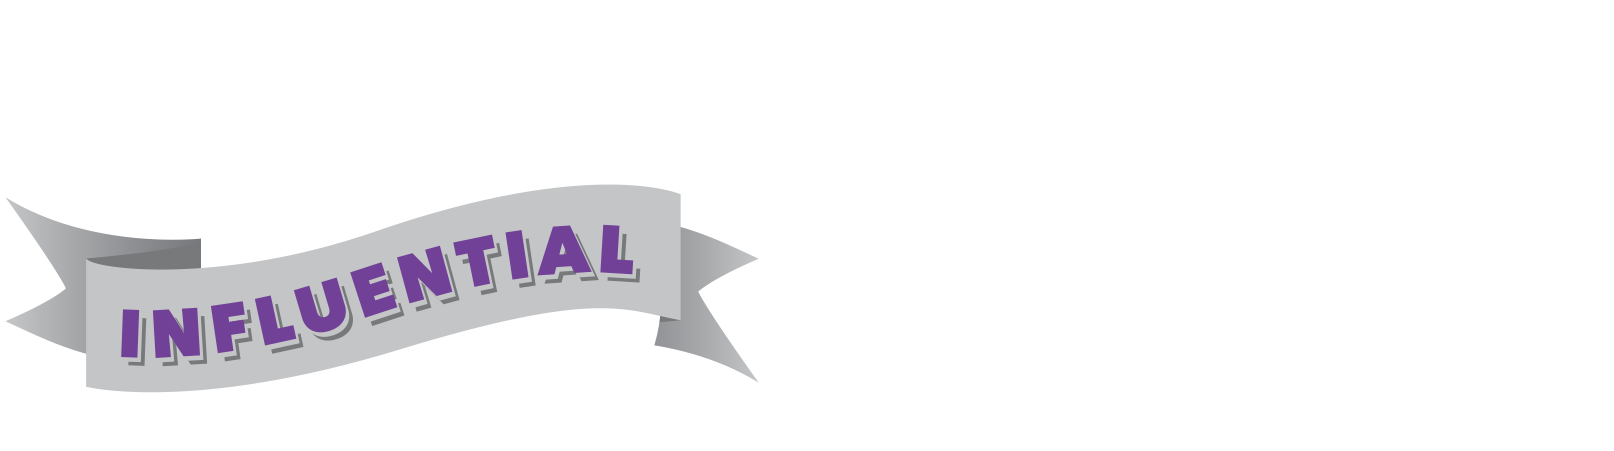 new women in energy logo 24